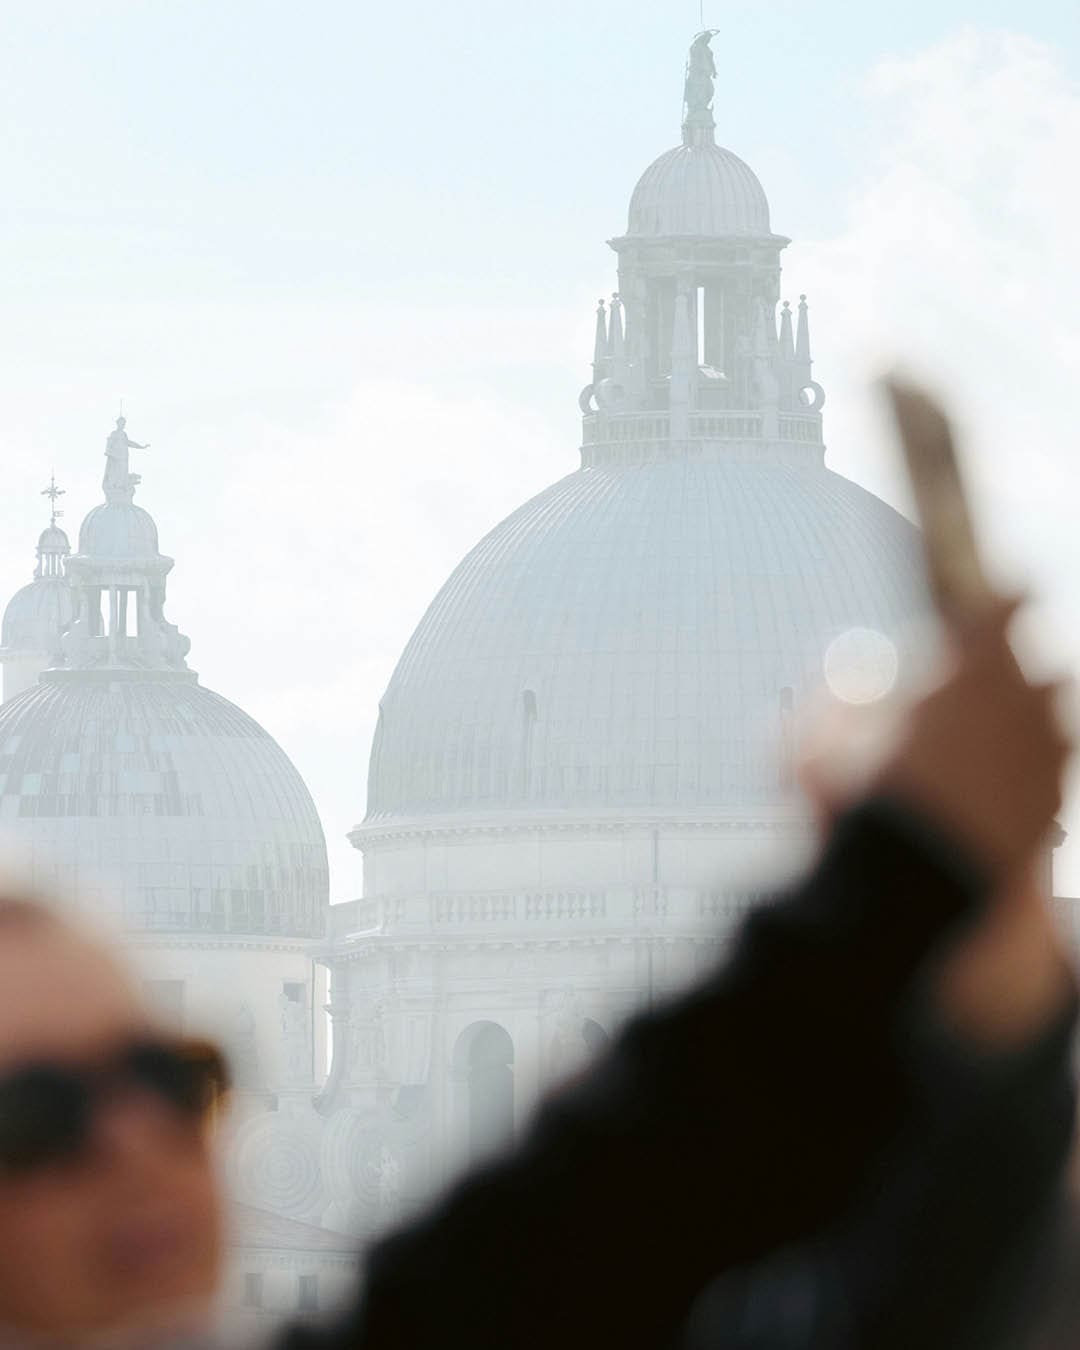 Tourist taking a selfie in Venice